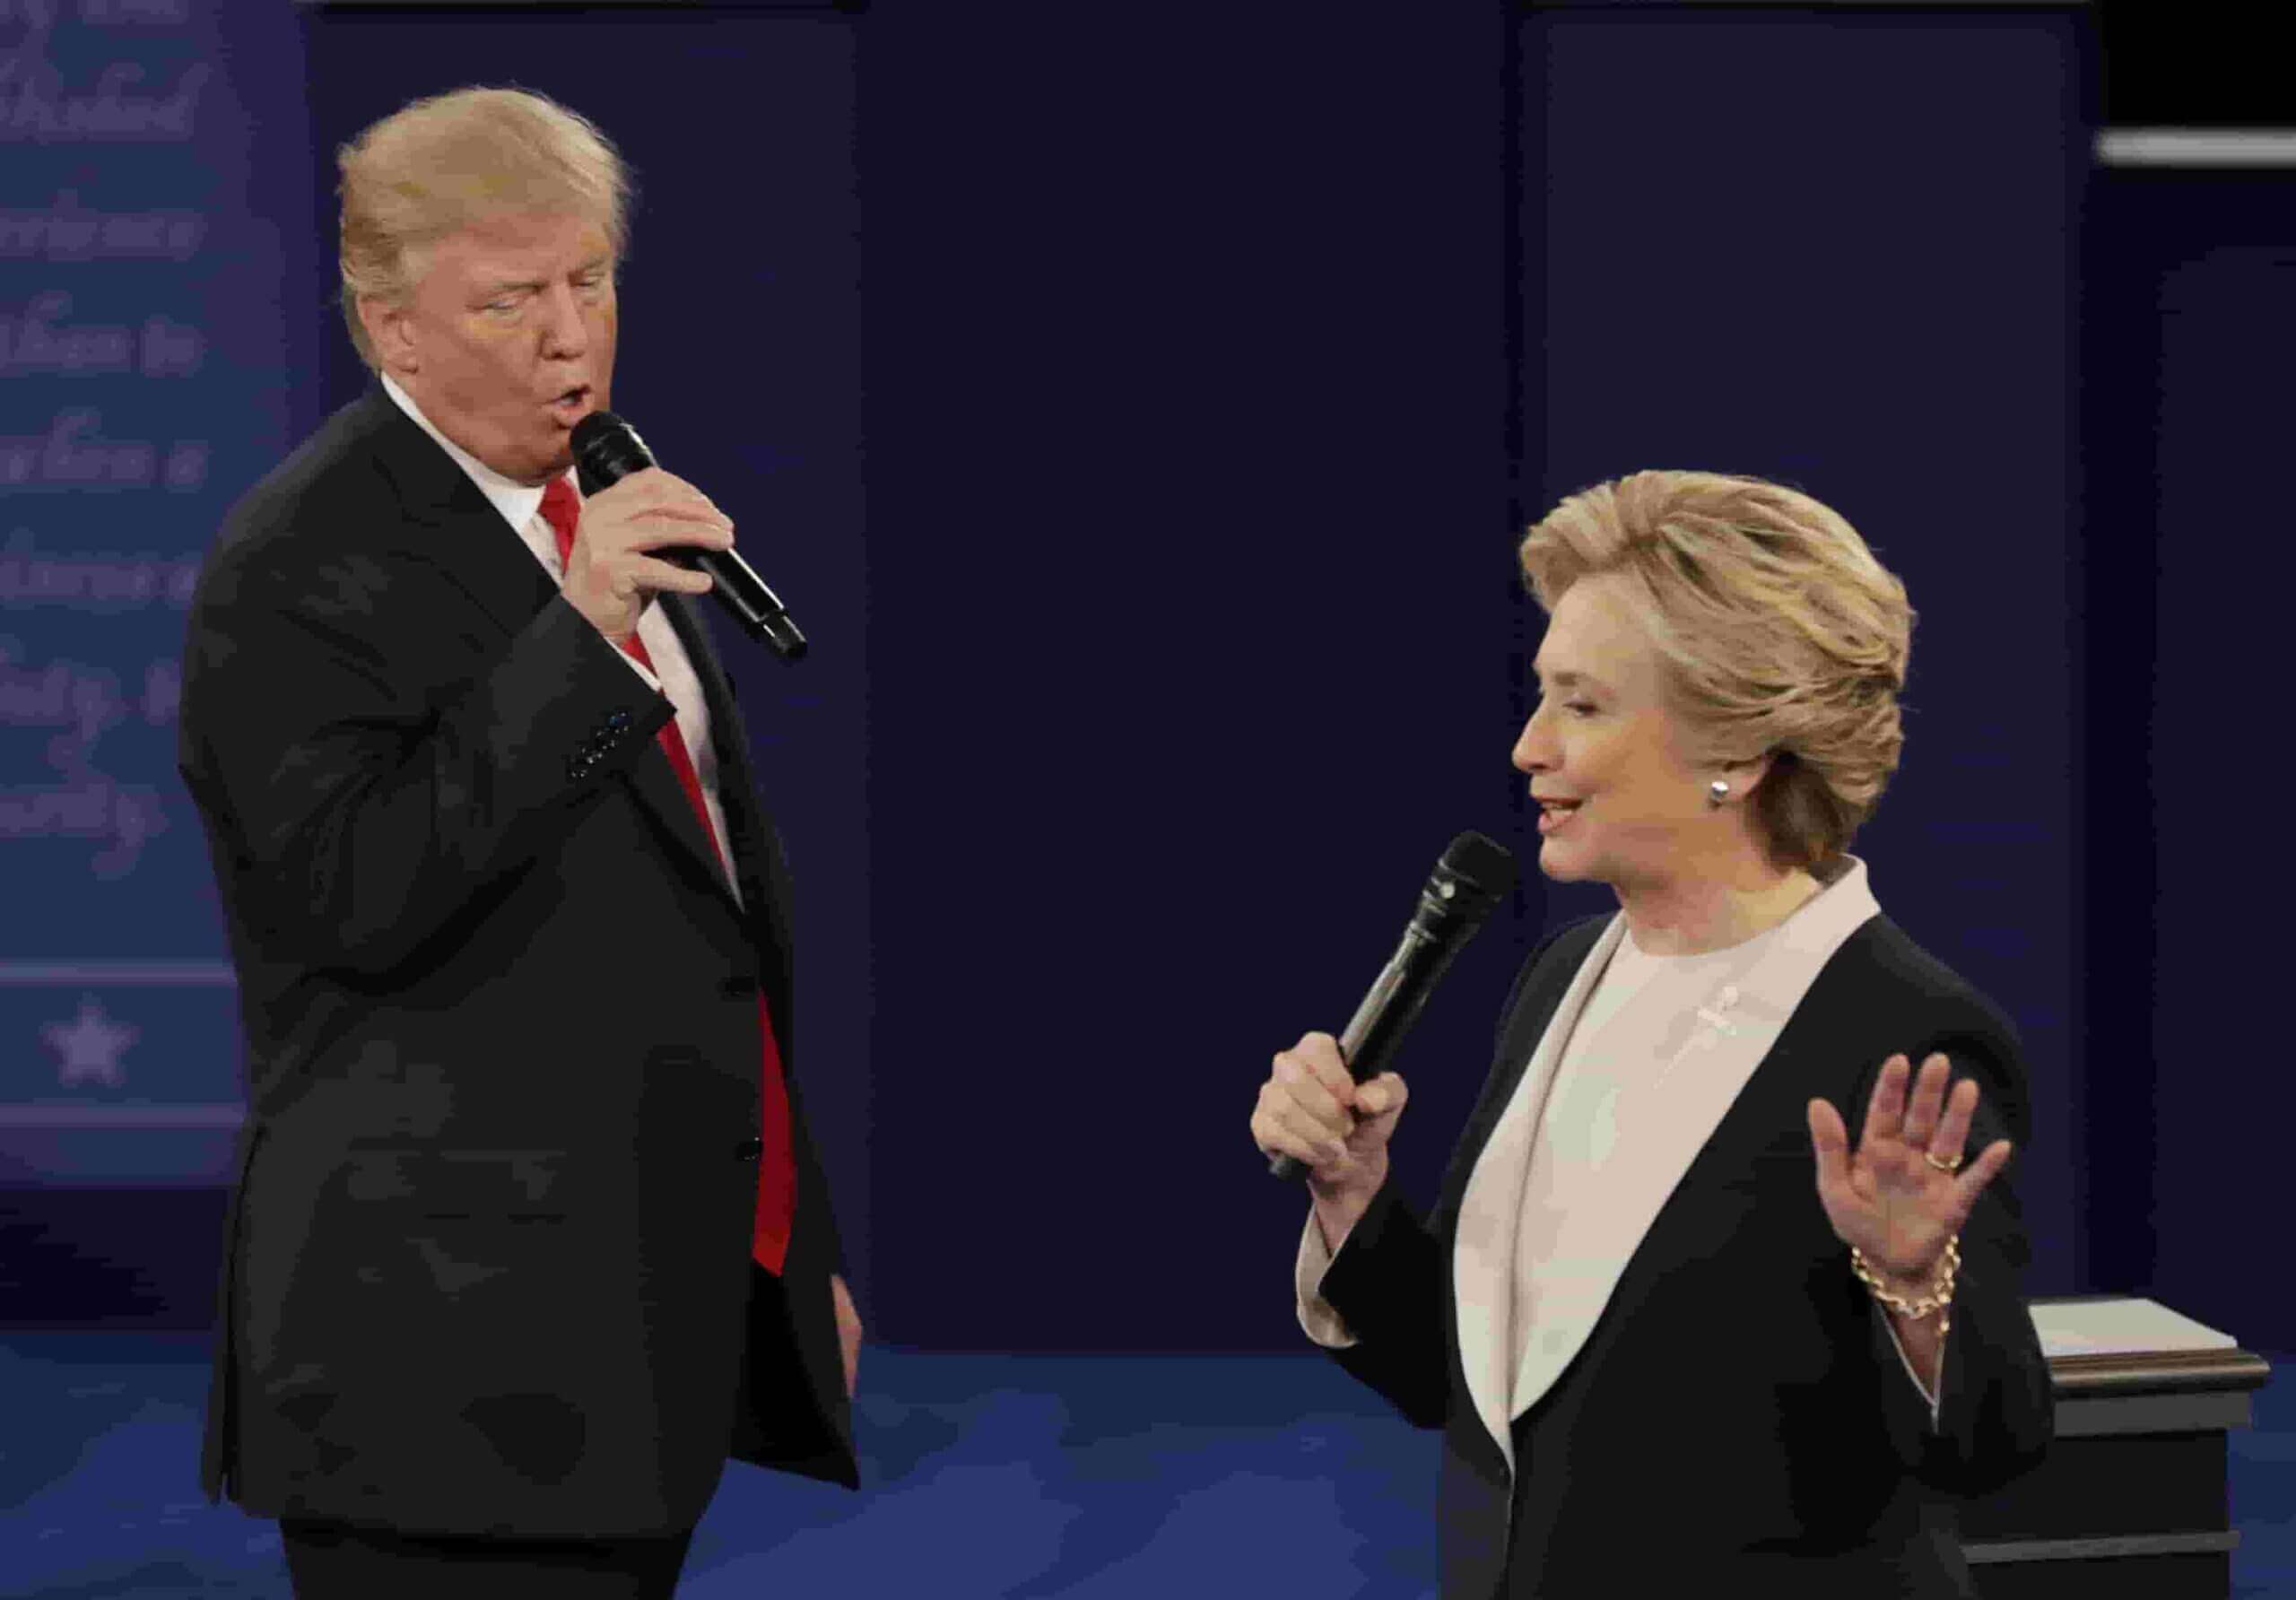 Trump and Clinton Debate Session